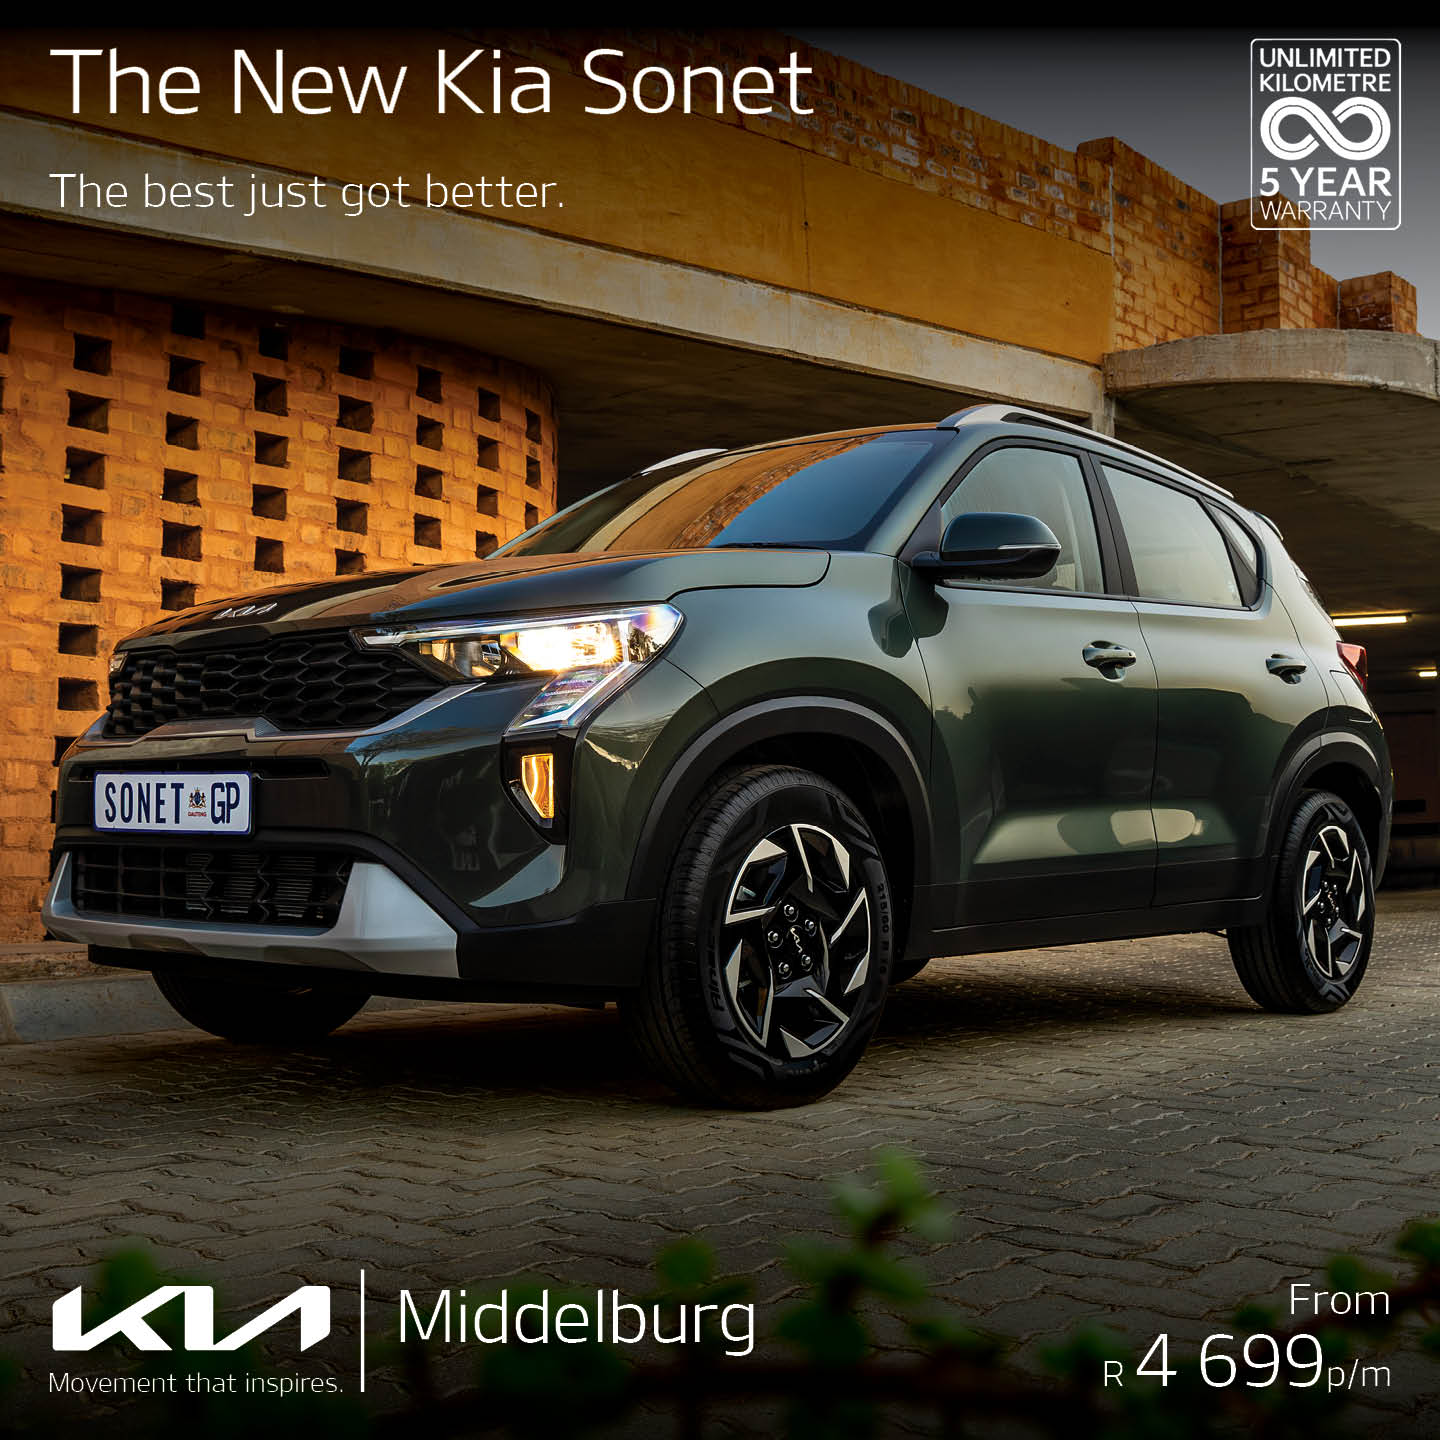 The best just got better! The New KIA Sonet image from Eastvaal Motors